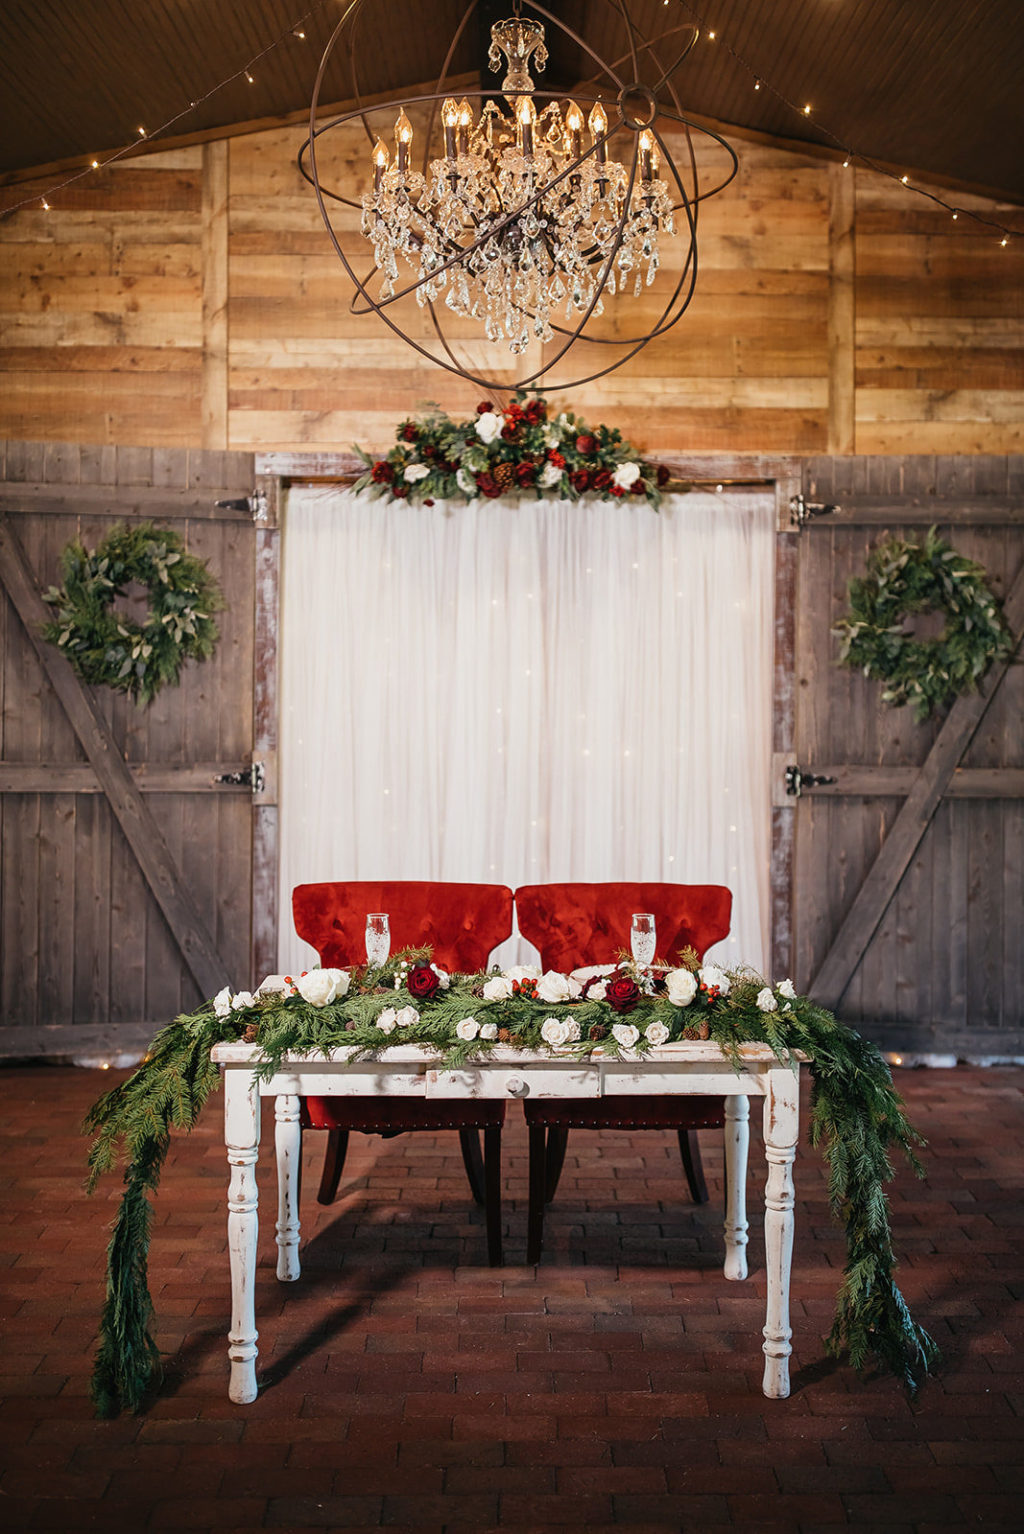 Florida Rustic Country Fall Winter Barn Wedding | Farm Greenery Garland Red Roses White Wreath Christmas Inspired Wedding Decor